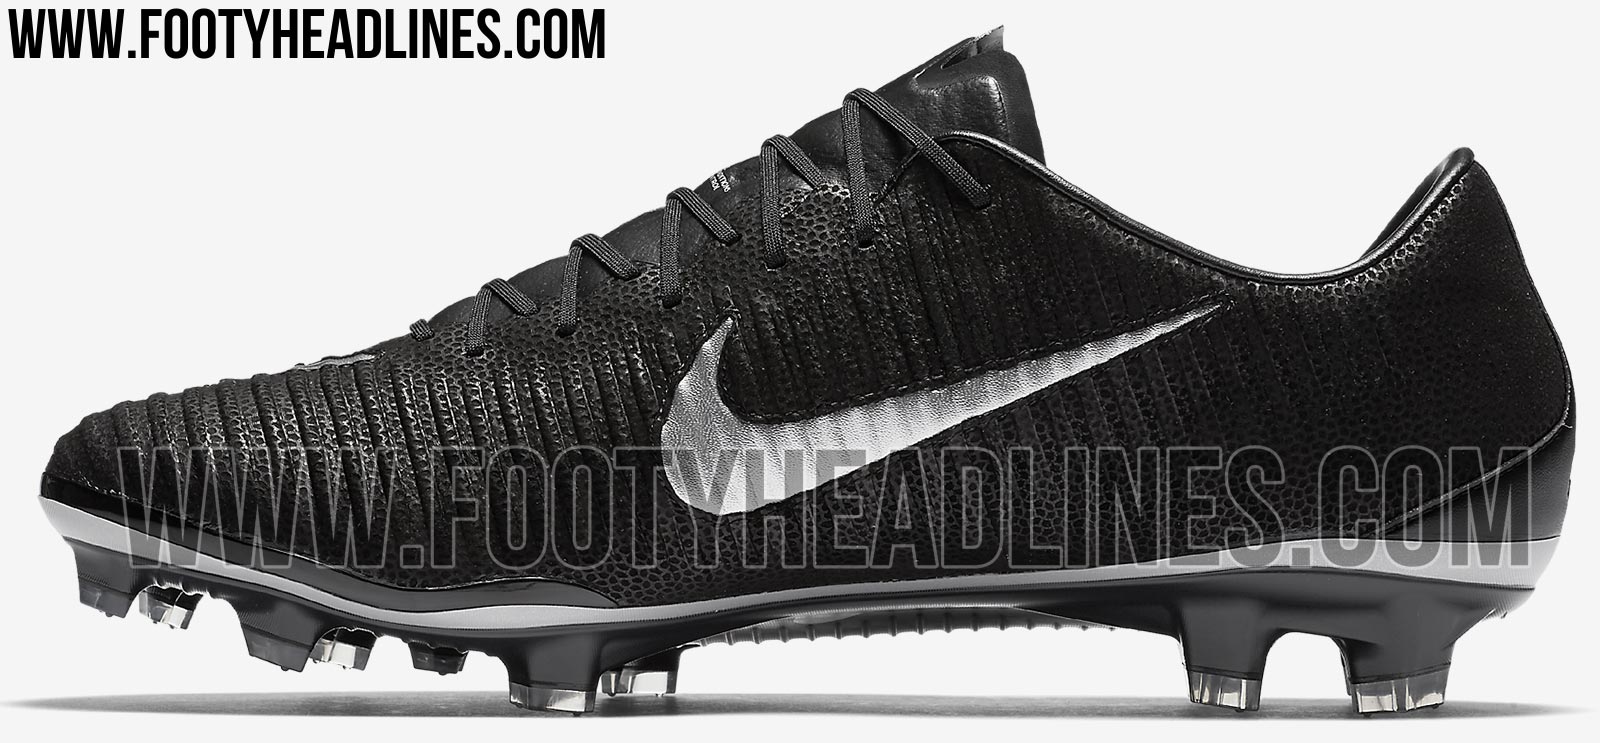 Black Nike Vapor XI Tech Craft K-Leather Boots Leaked - Footy Headlines